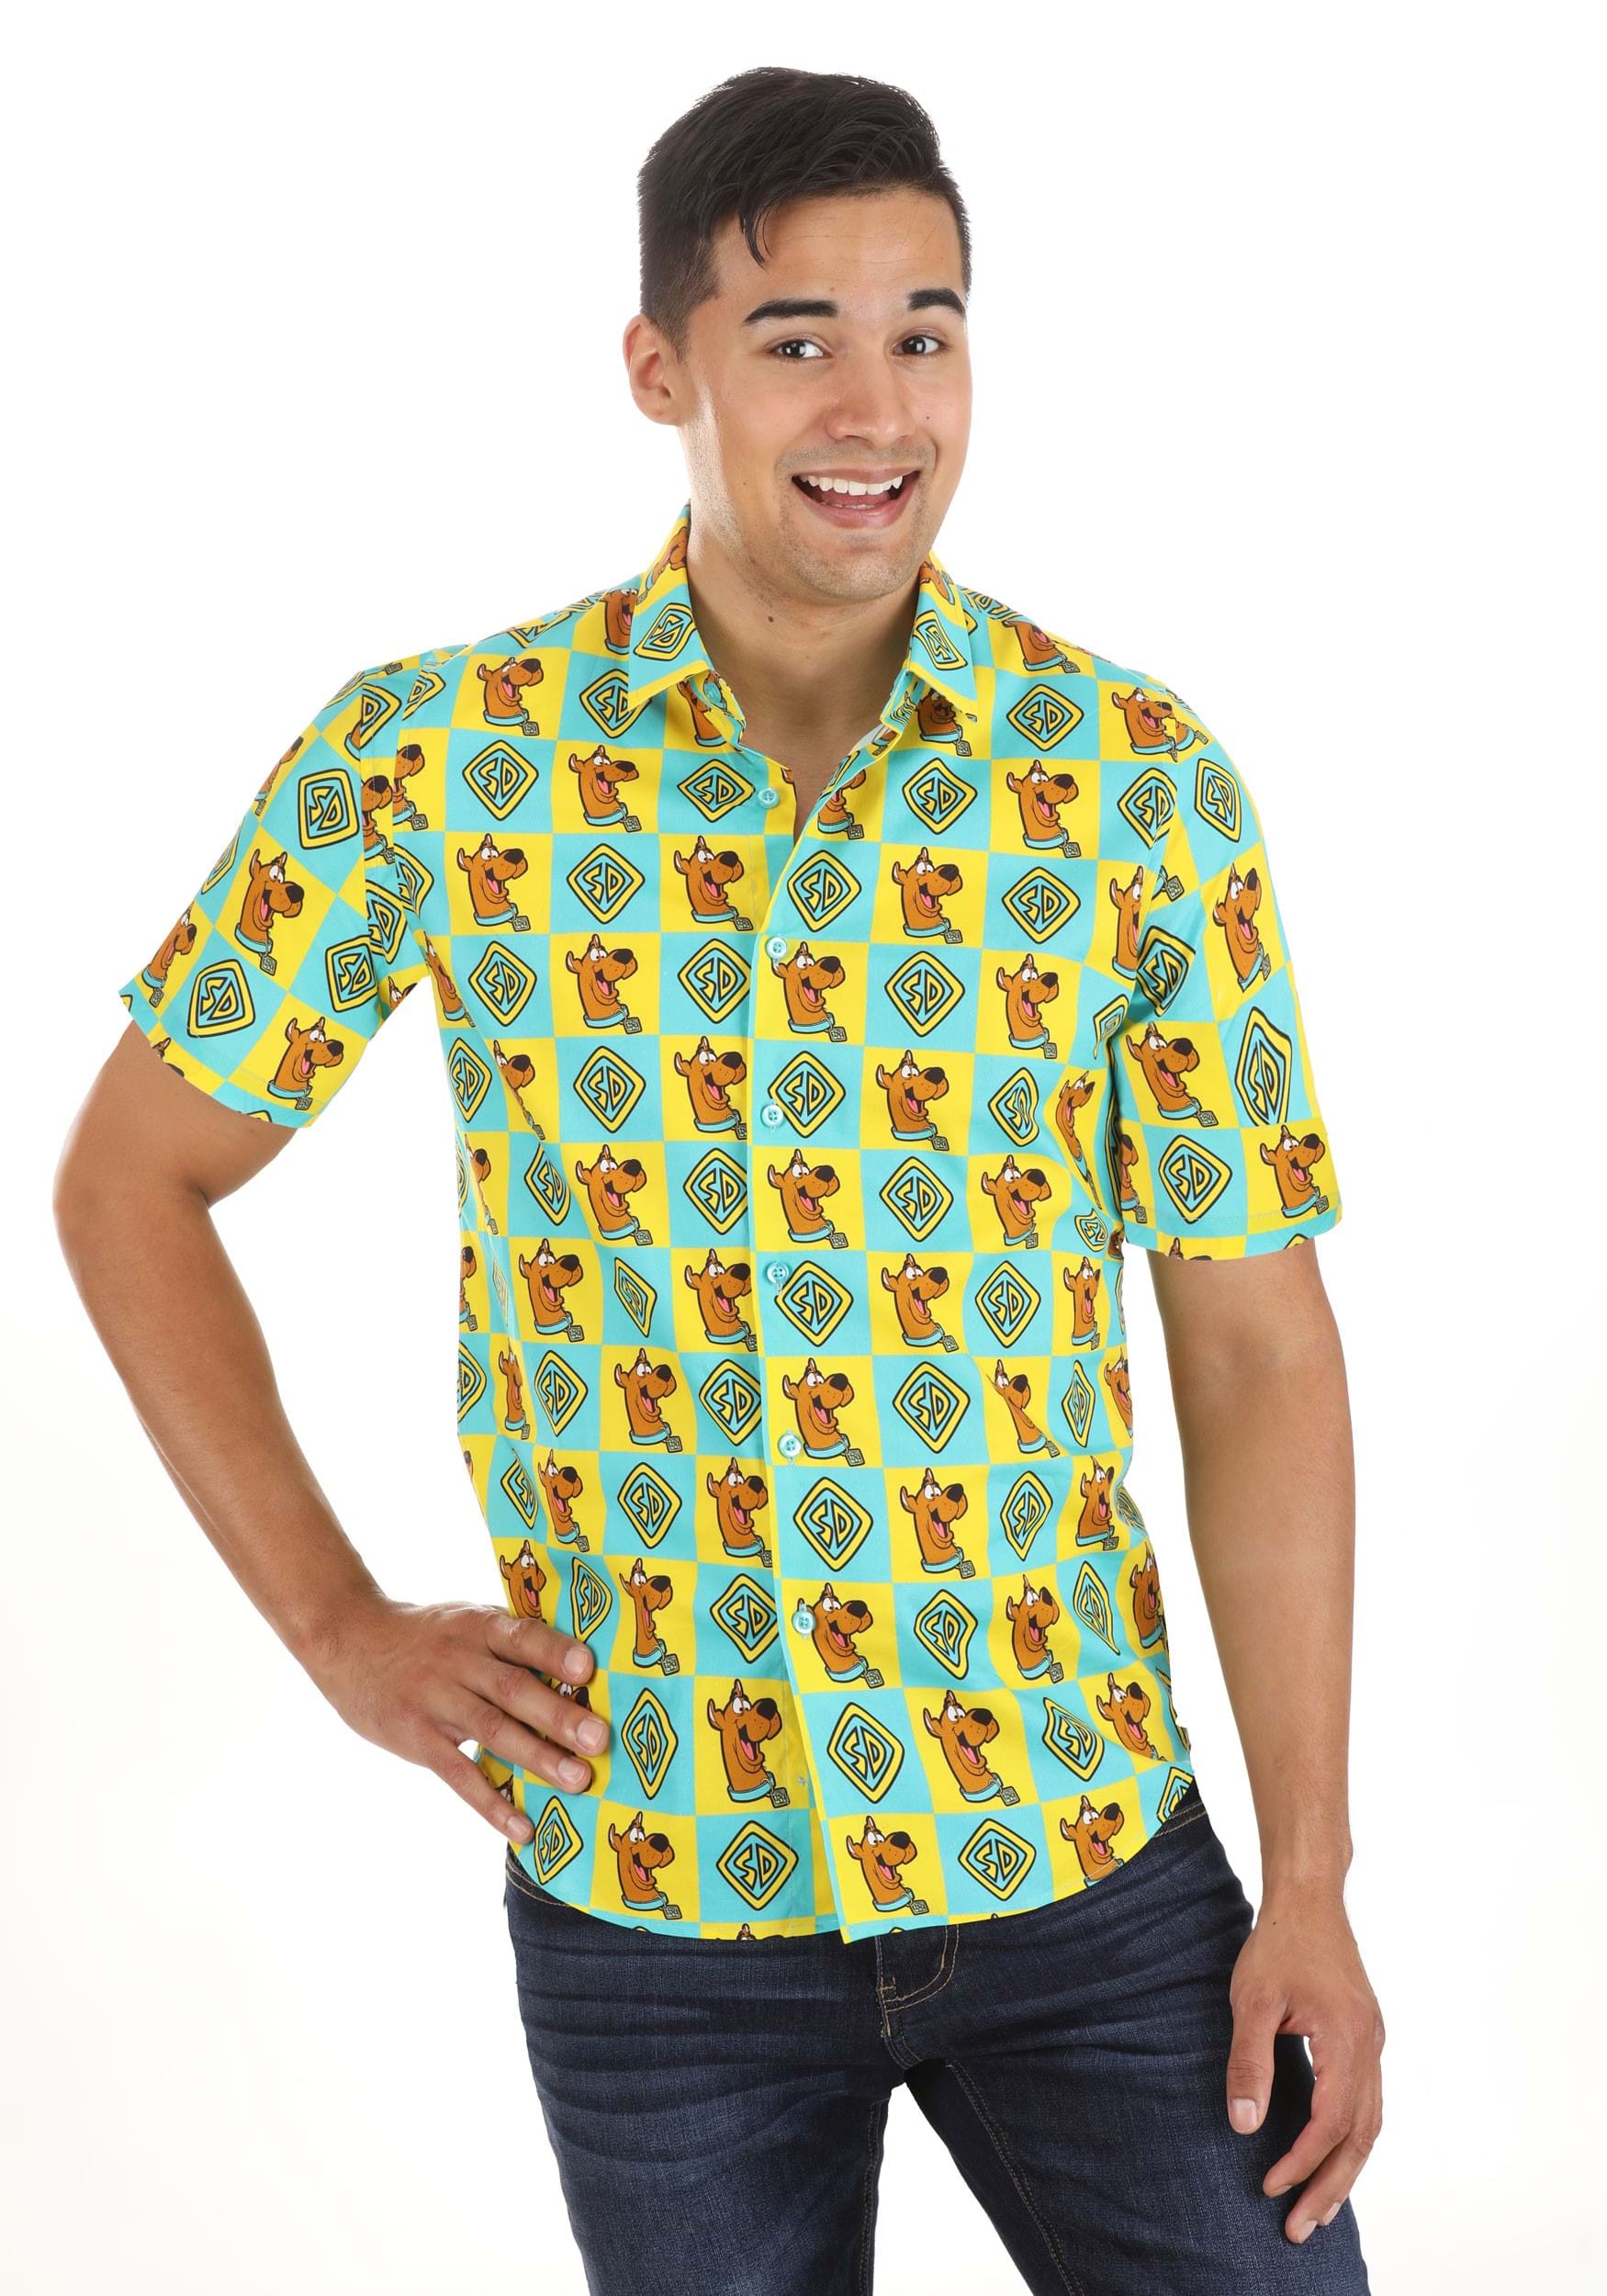 Adult Scooby Doo Collar Shirt for Men | Scooby Doo Apparel